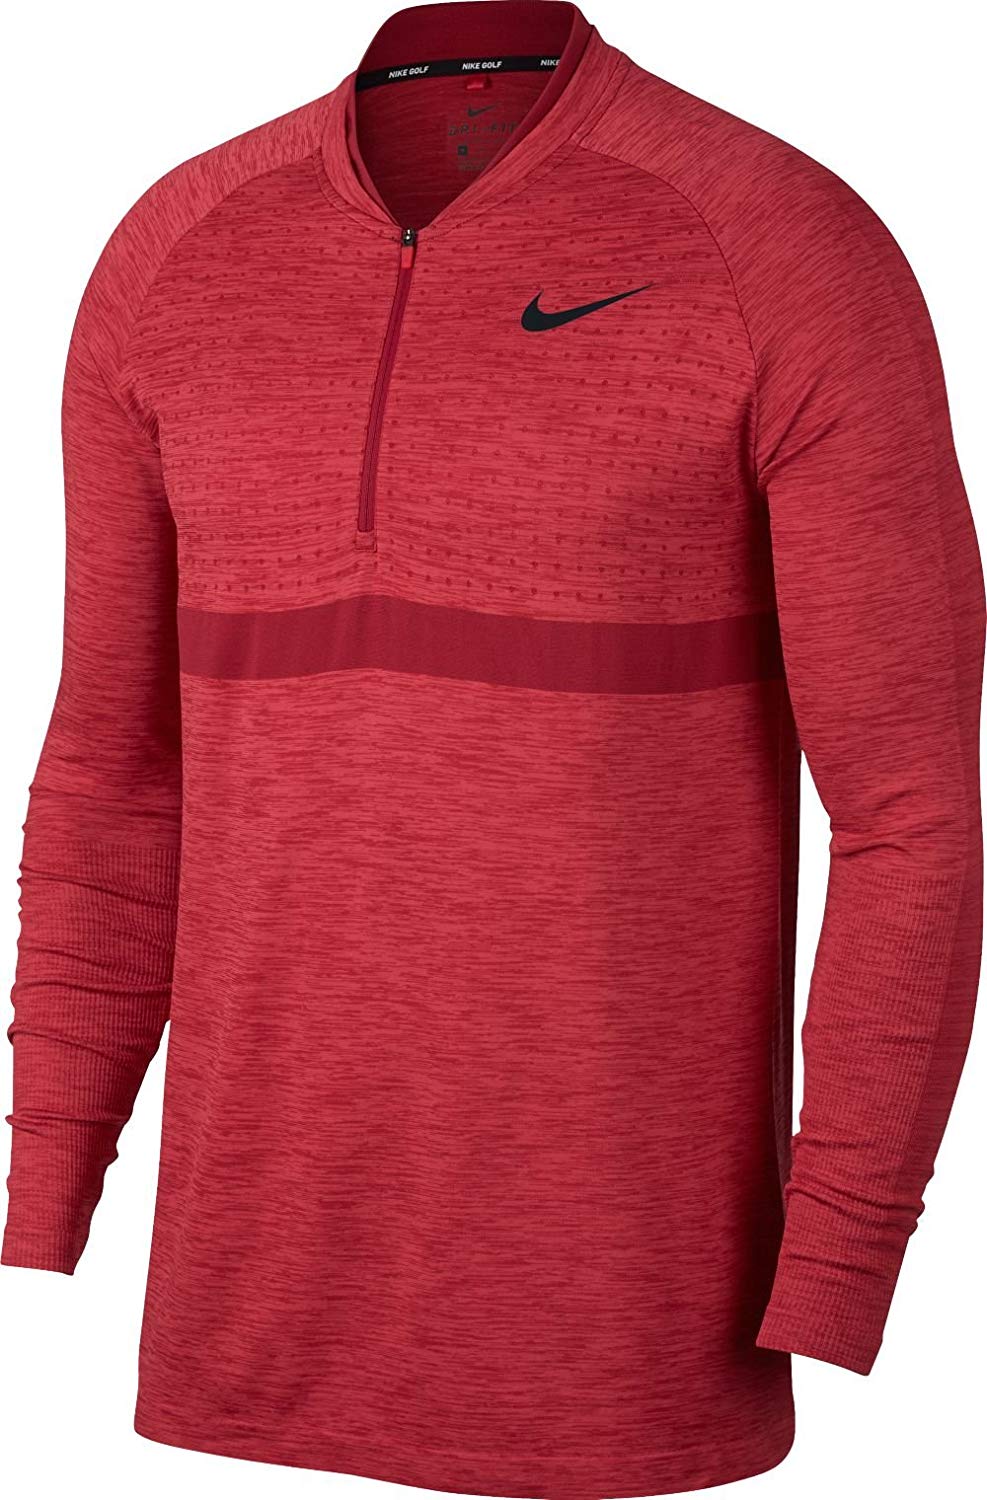 Nike Mens Dri-Fit Seamless Golf Top Pullovers